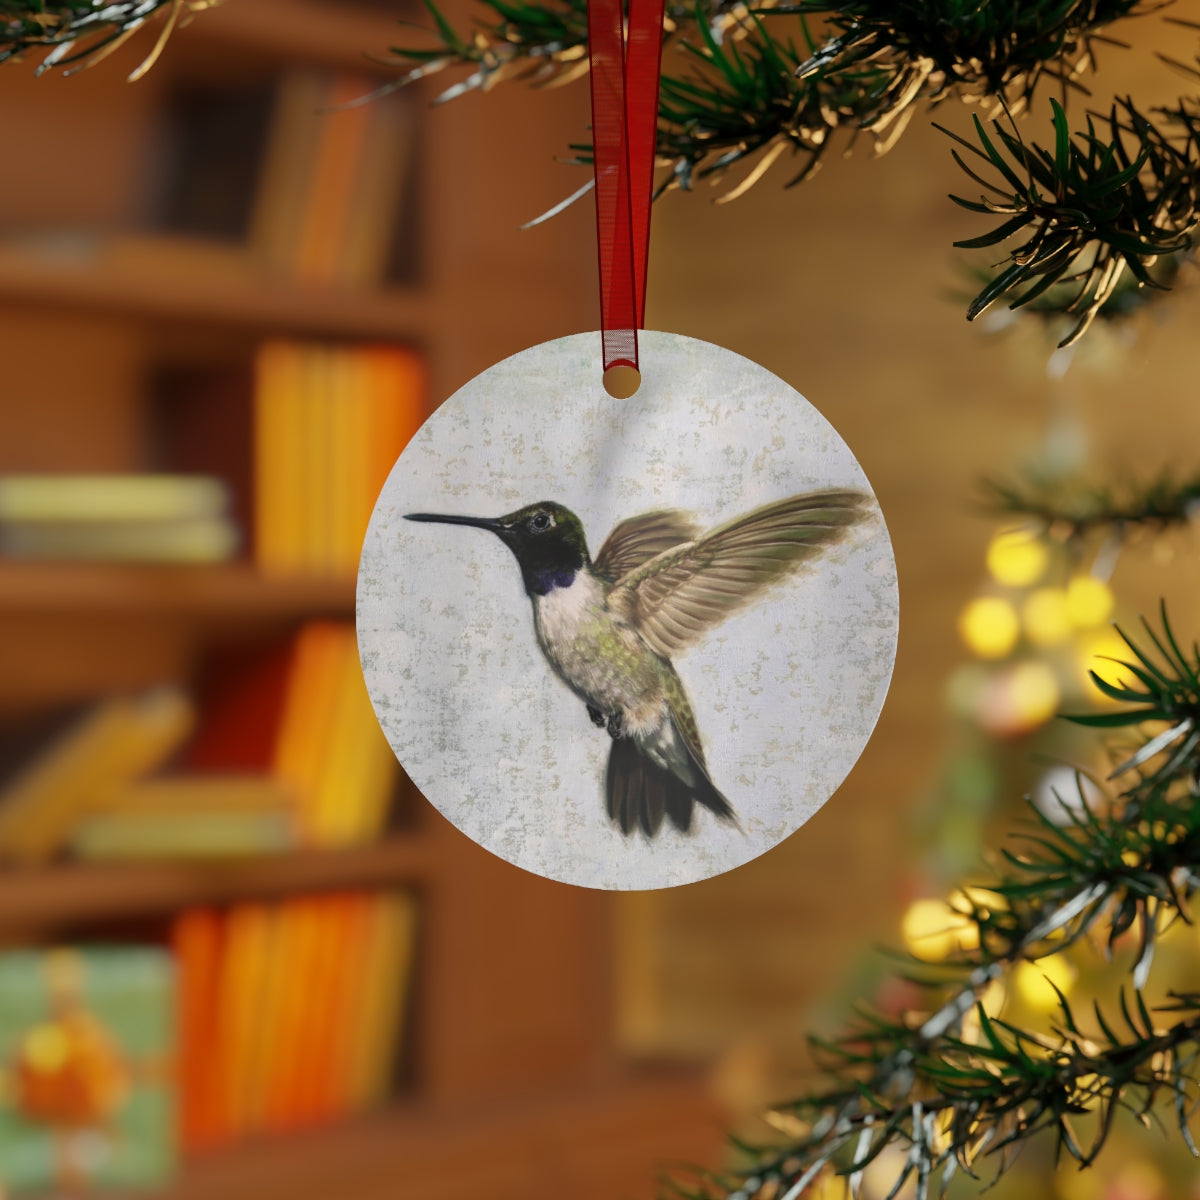 Hover Hummingbird Metal Christmas Ornament